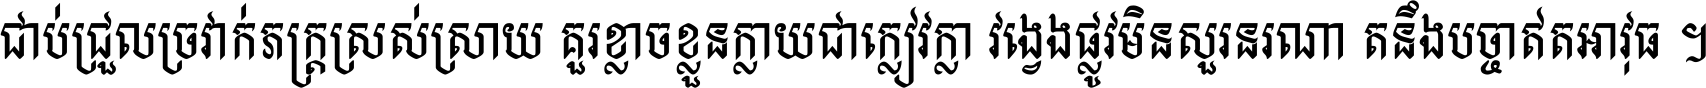 Khmer OS Bokor